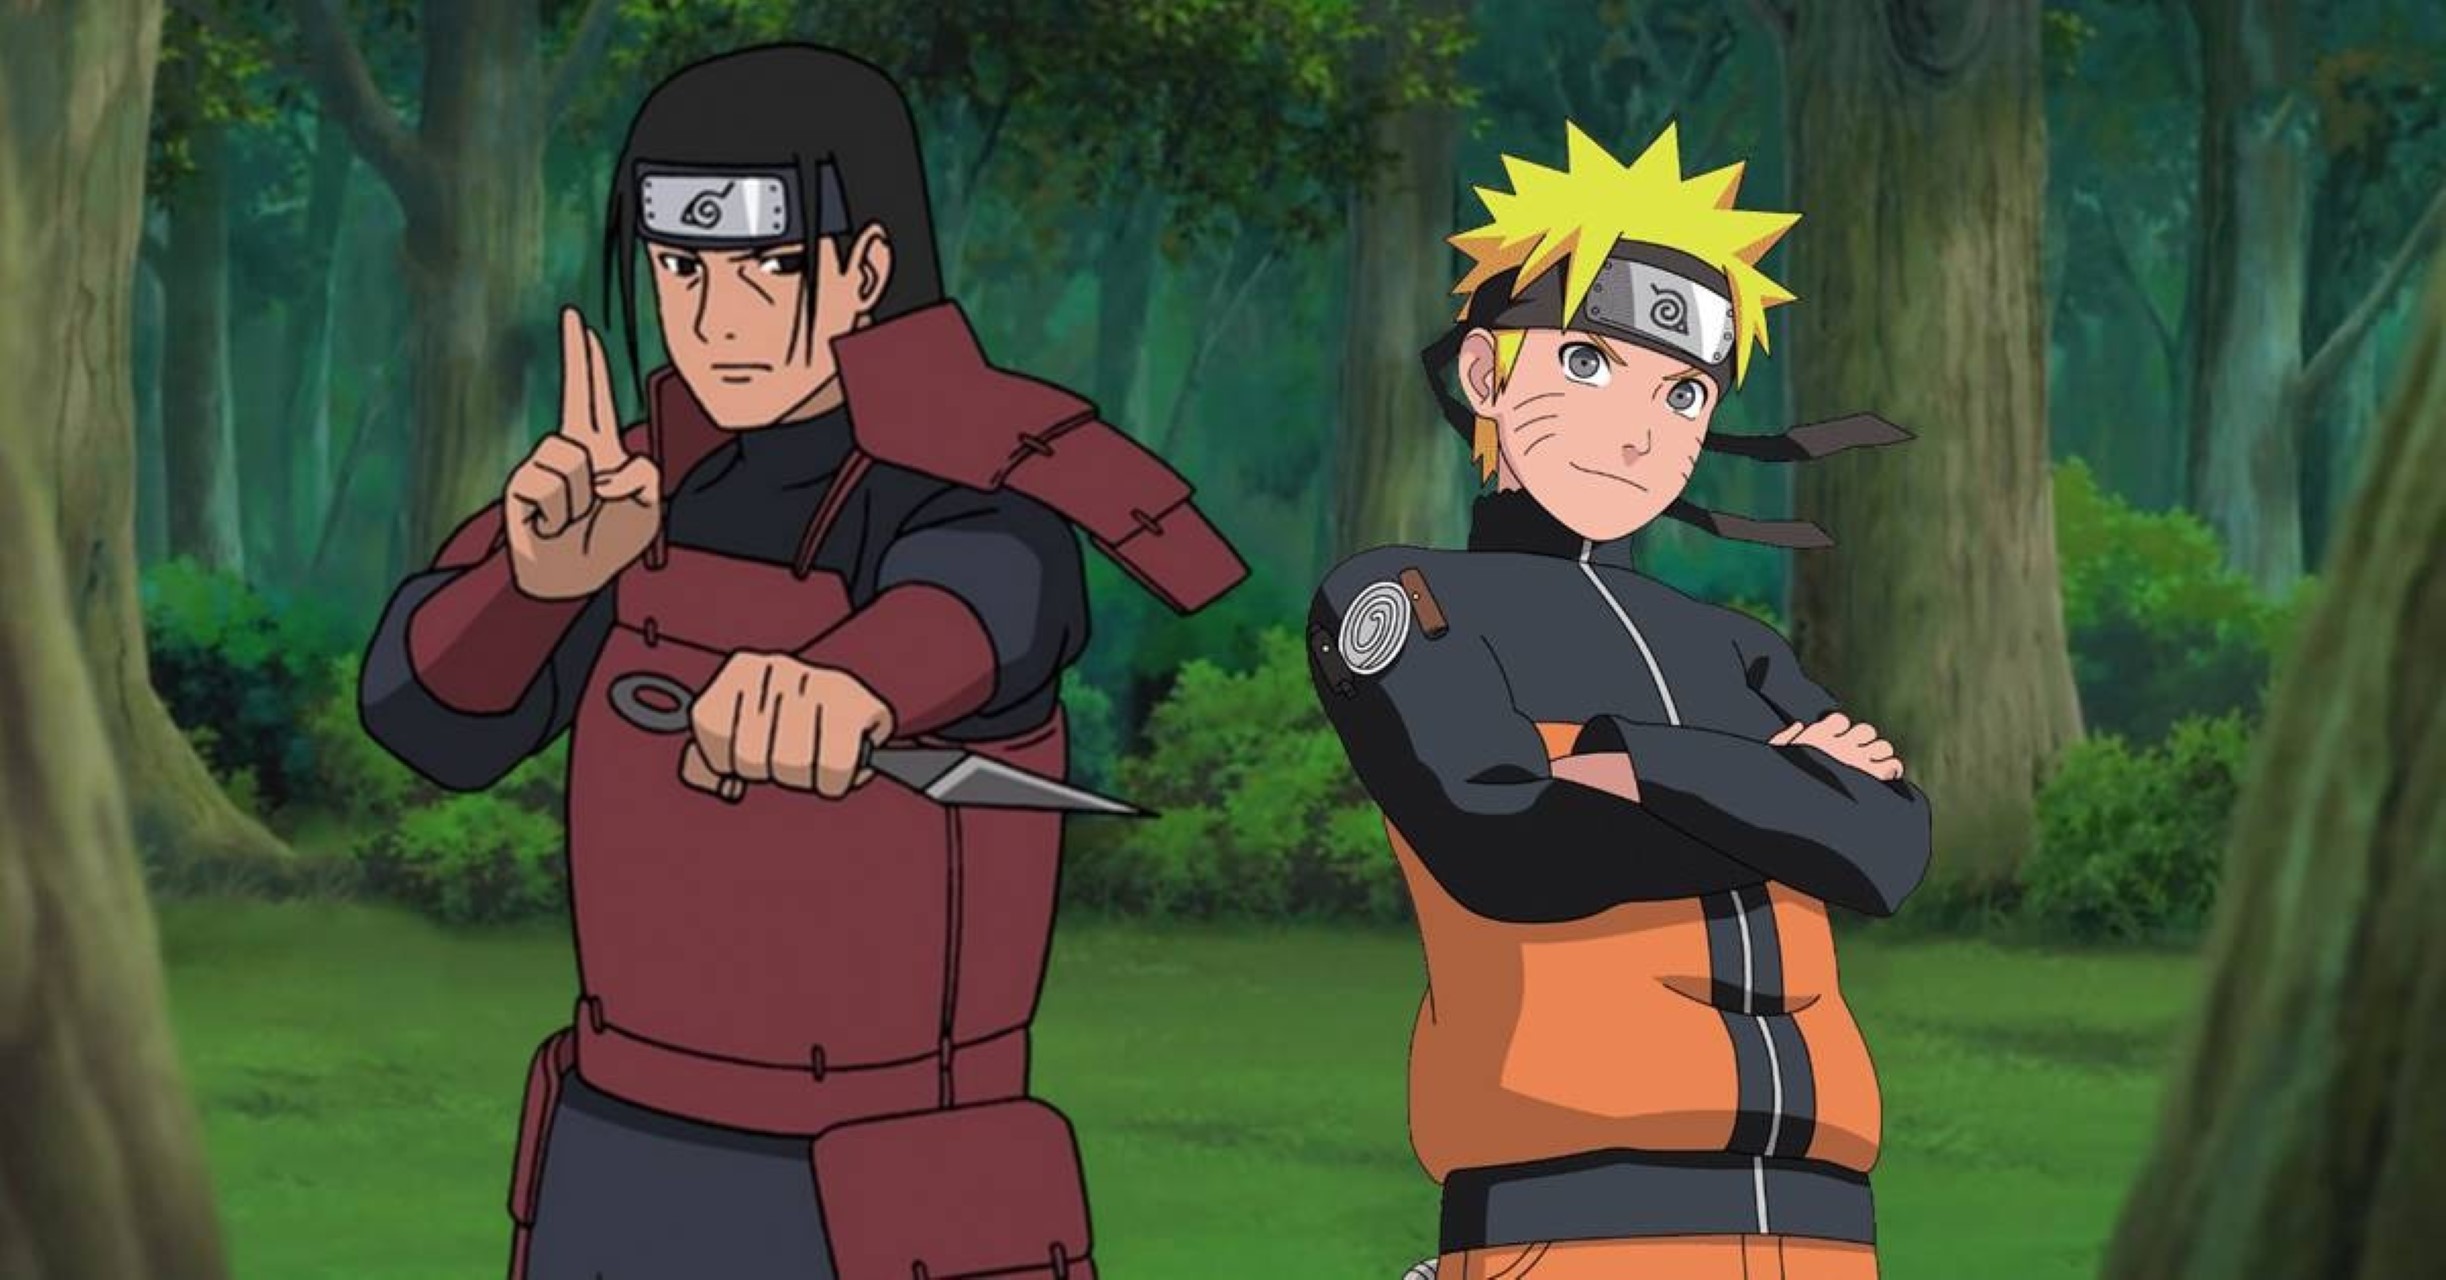 Esta é a prova de que Naruto ganhou a habilidade de usar jutsus de madeira  Mokuton iguais aos de Hashirama em Boruto: Naruto Next Generations -  Critical Hits